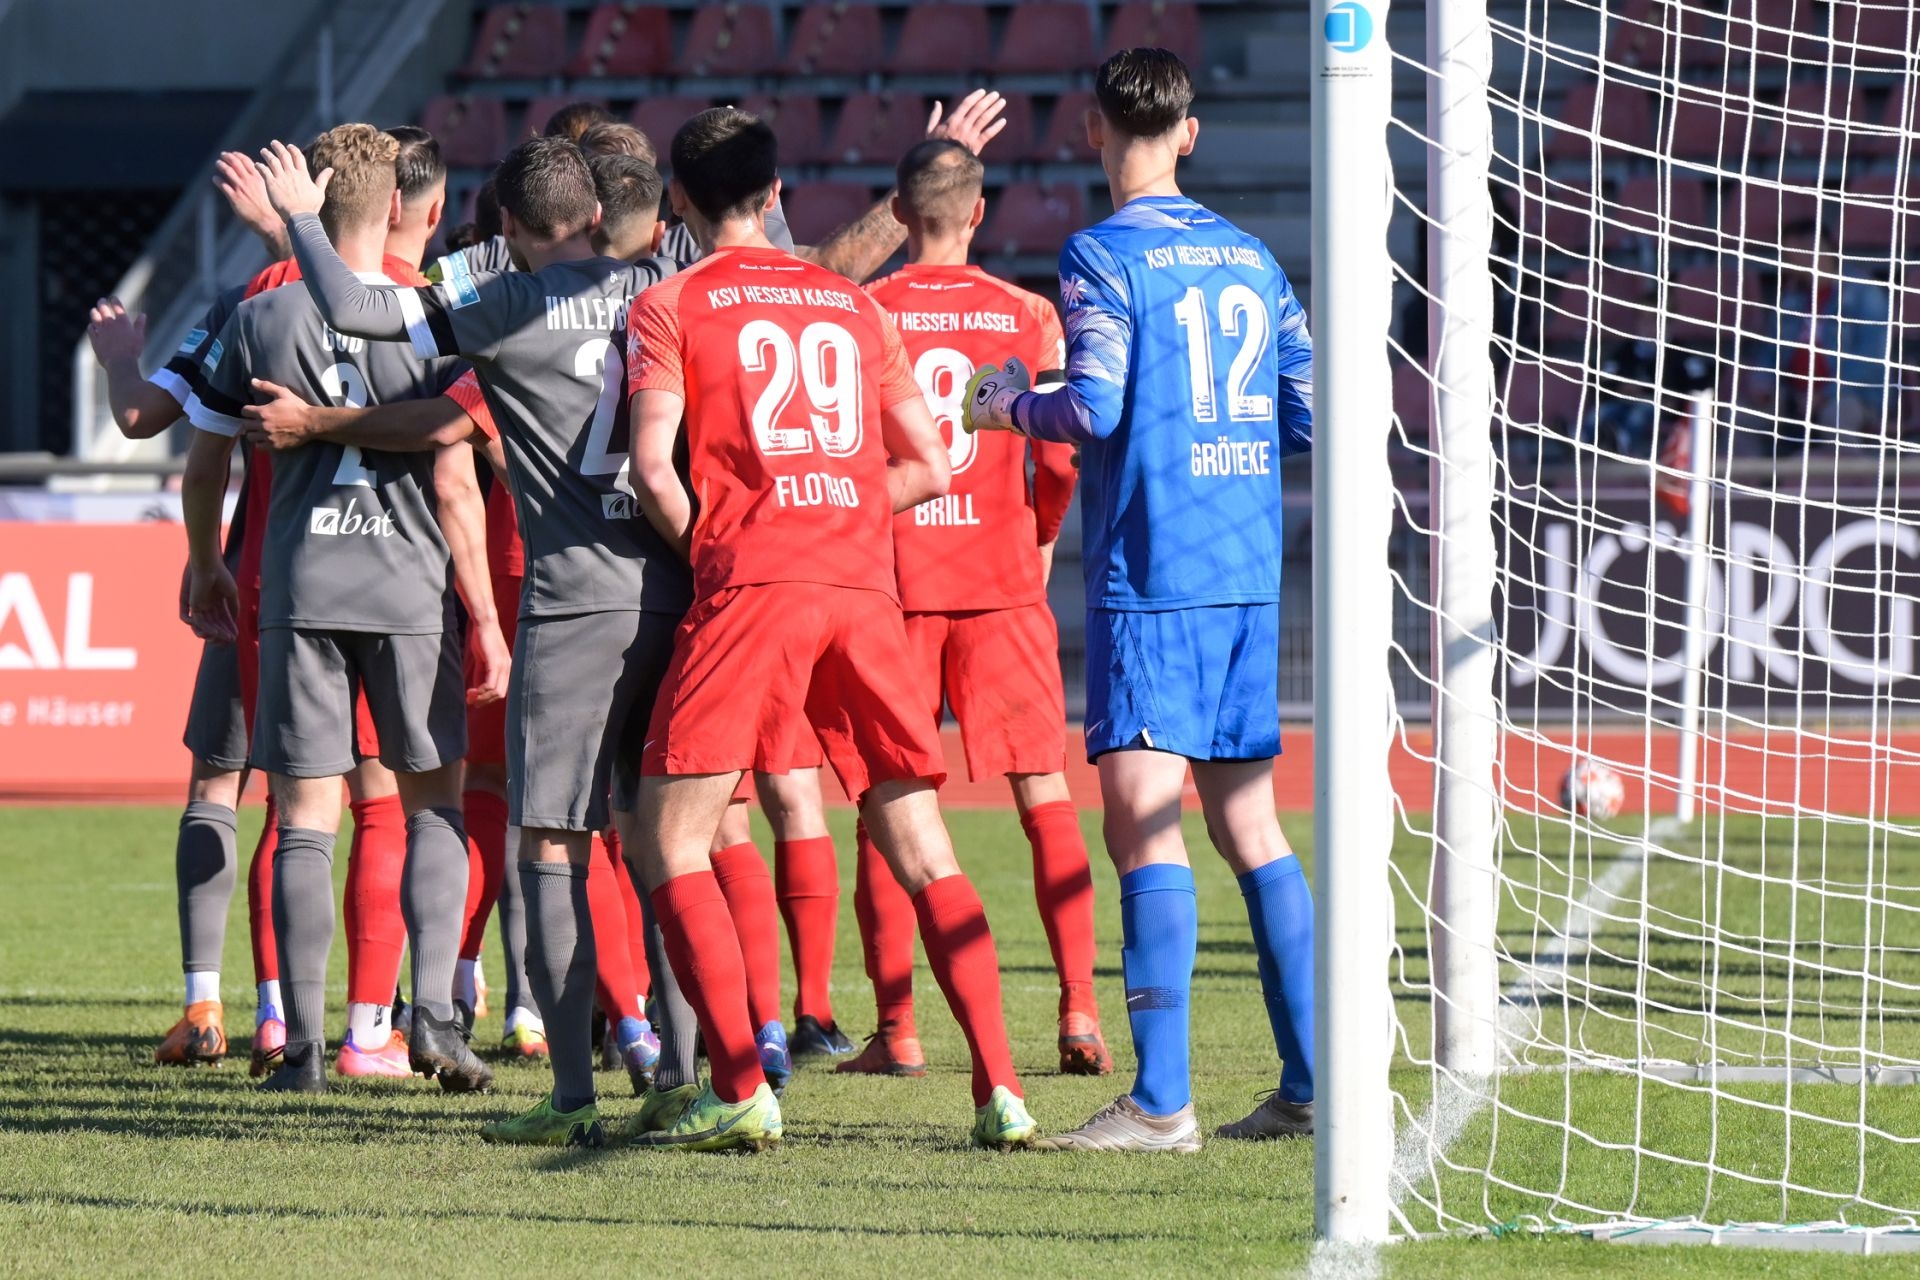 Regionalliga Südwest, Saison 2021/22, KSV Hessen Kassel, FC Astoria Walldorf, Endsatnd 0:2